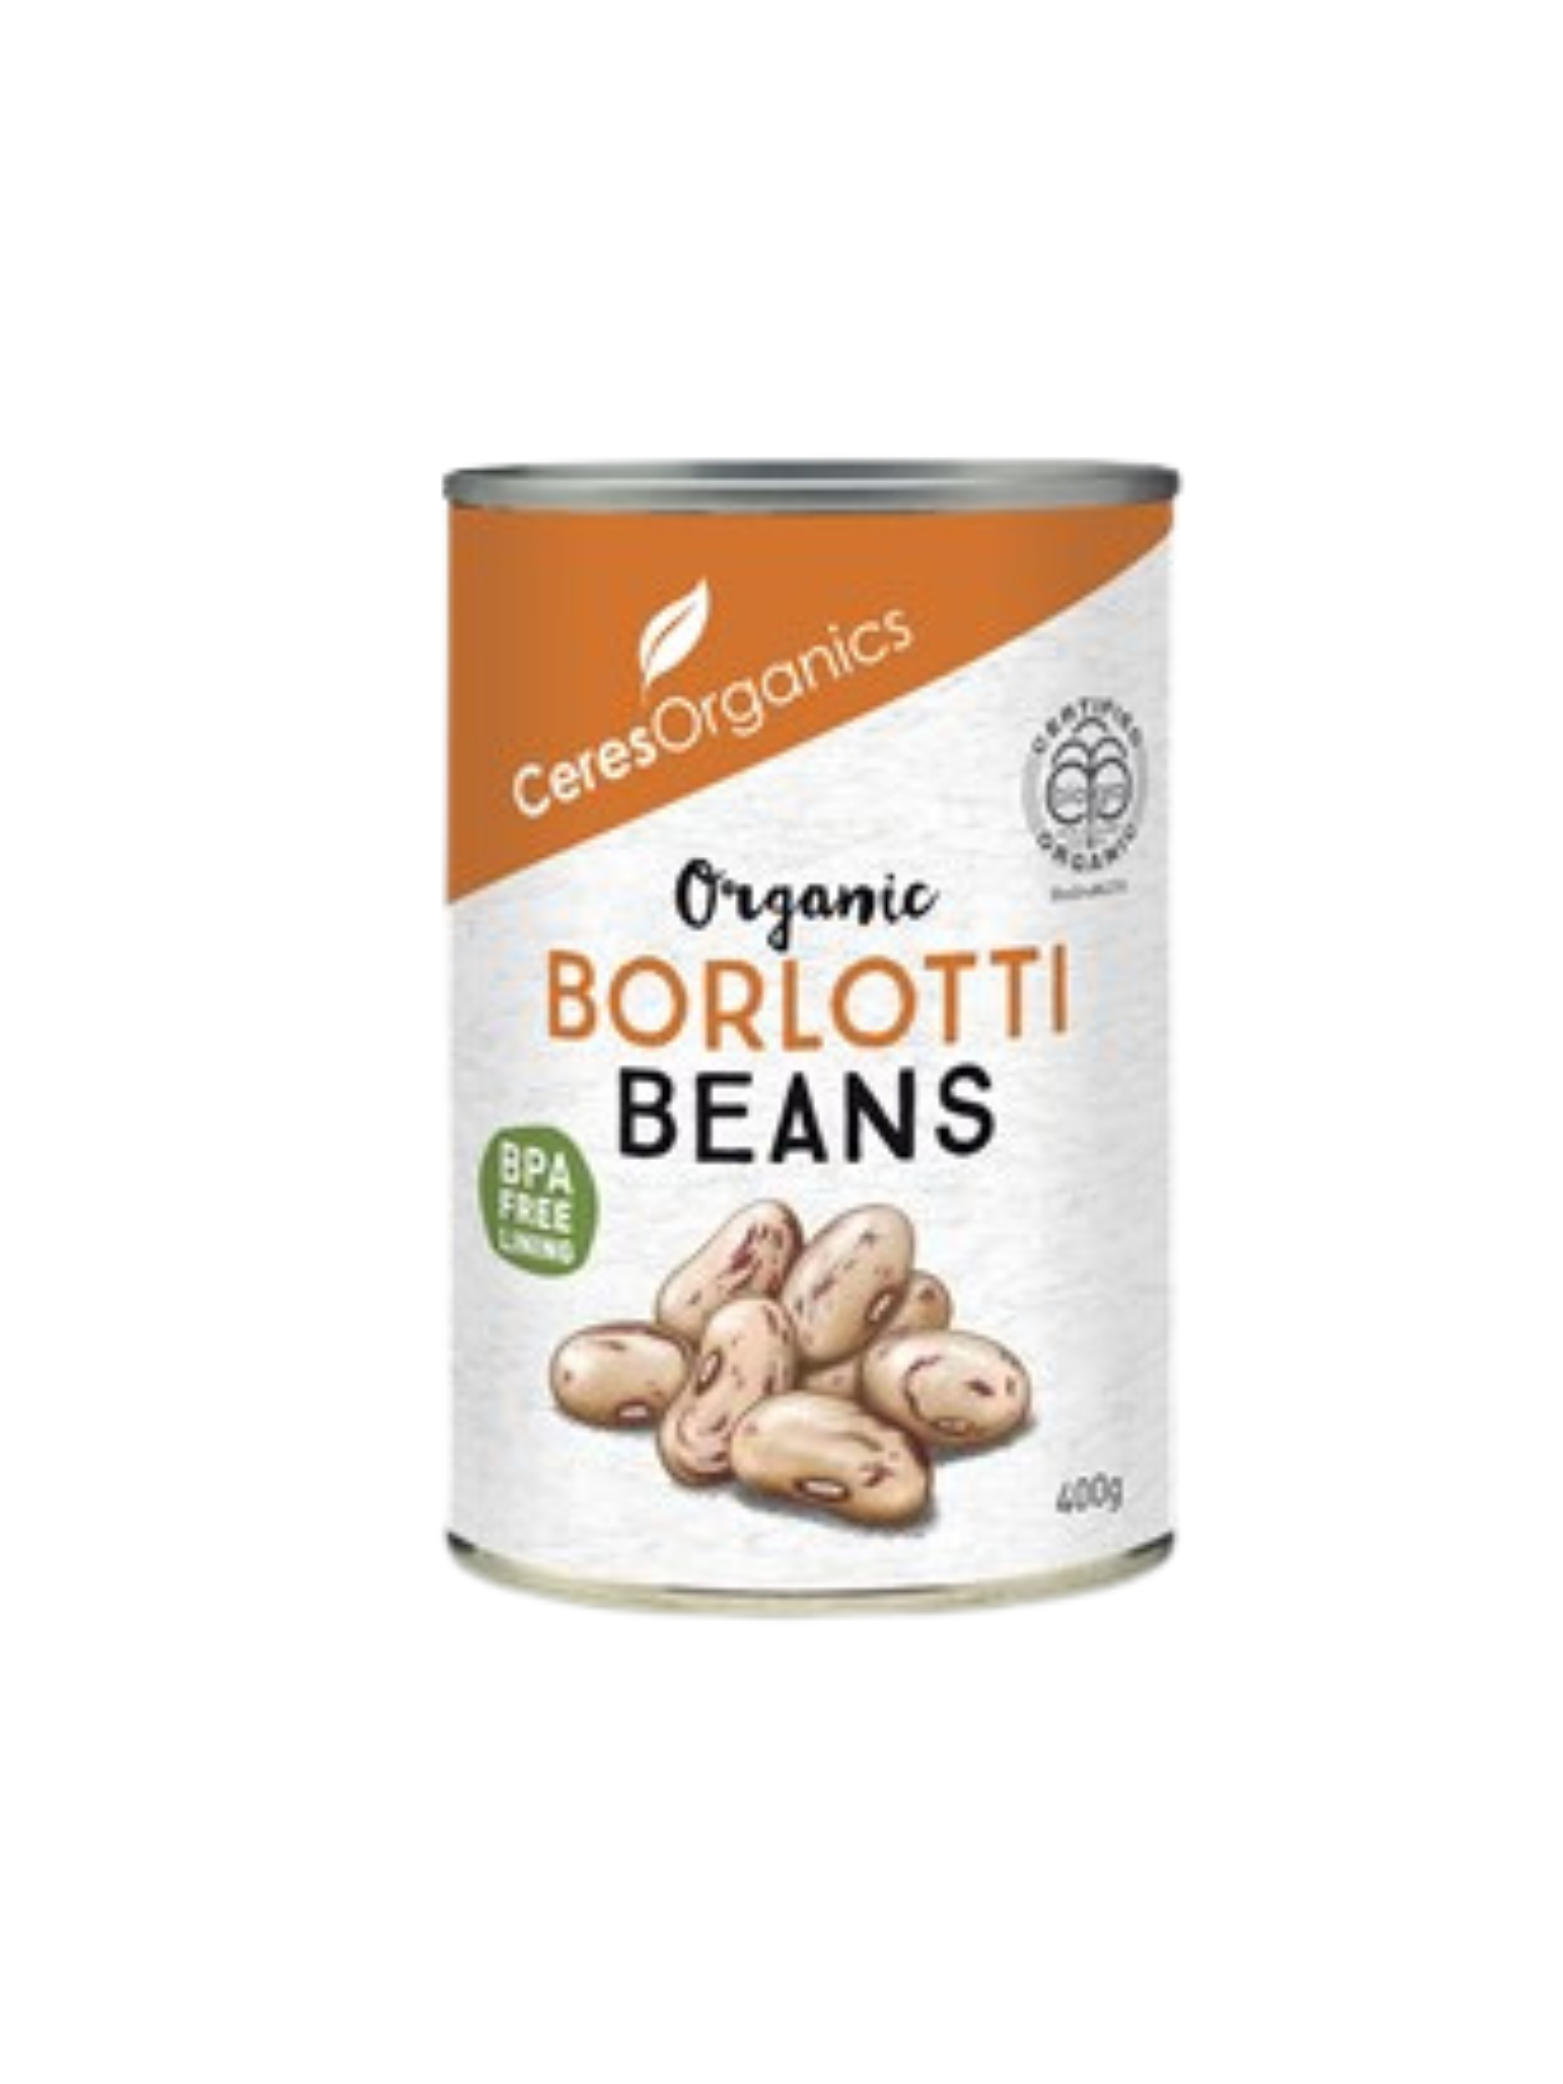 Organic Canned Borlotti Beans